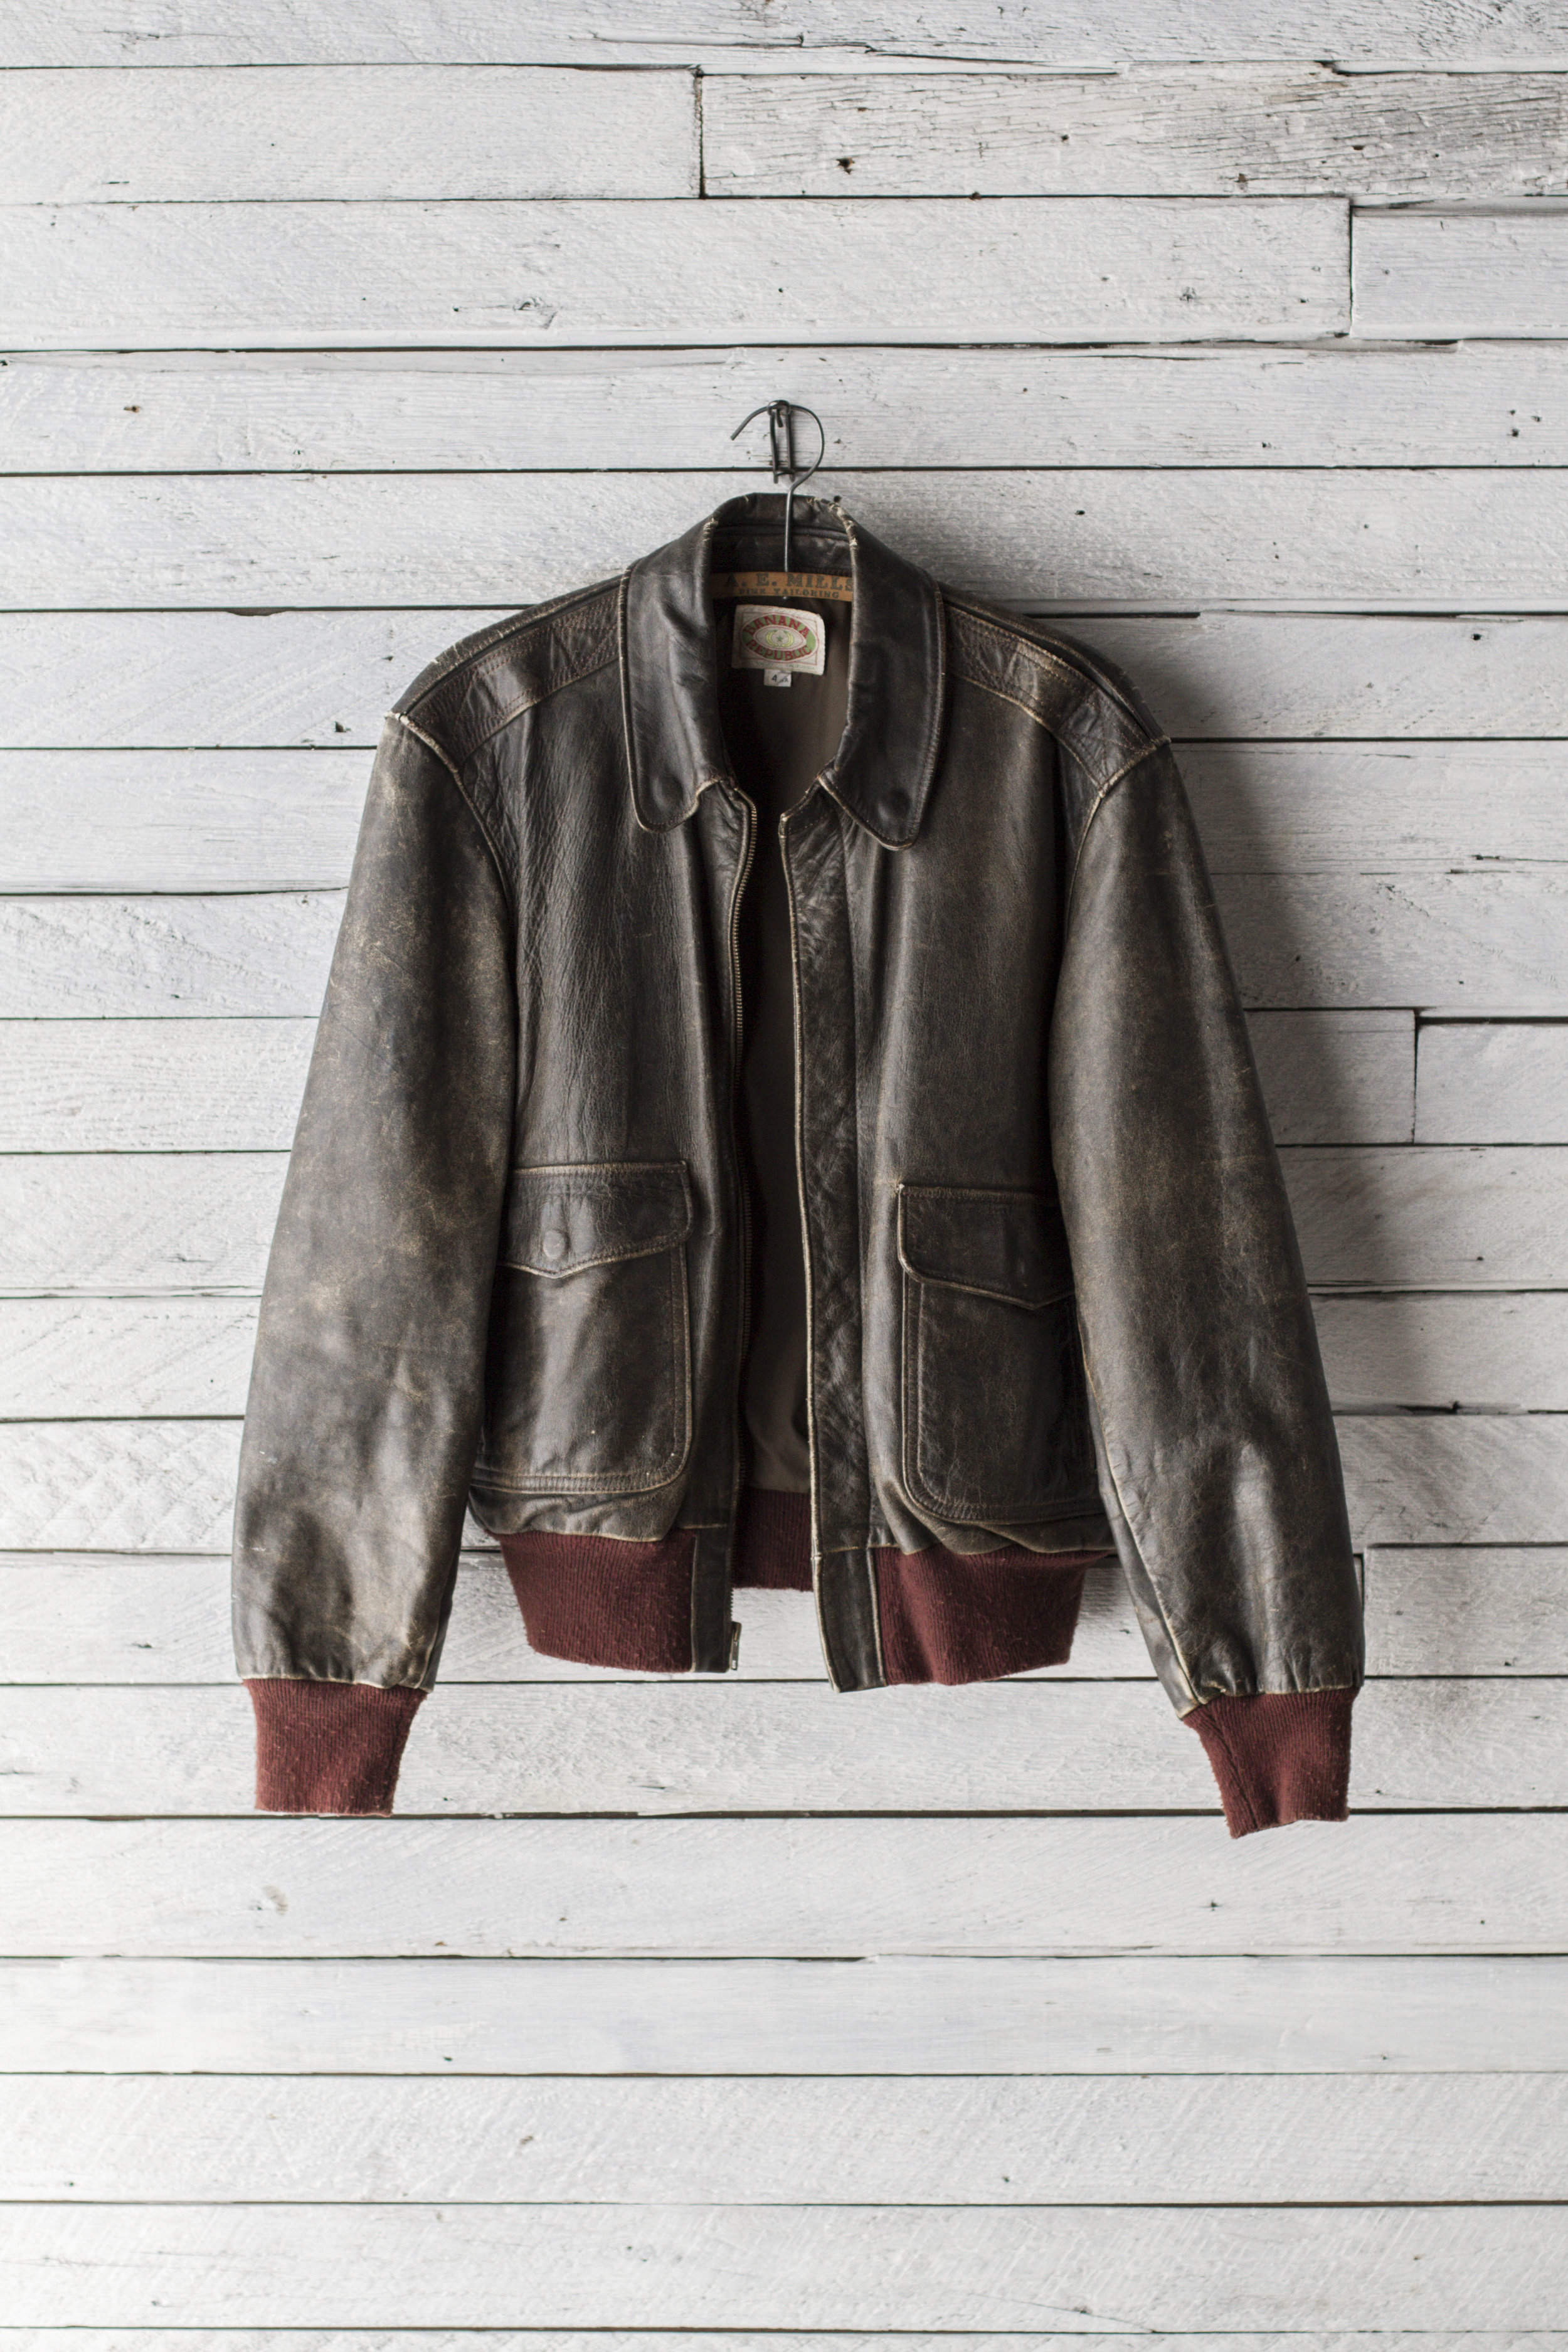 80s A-2 ☆本革☆old leather Flight jacketKAオールドレザージャケット